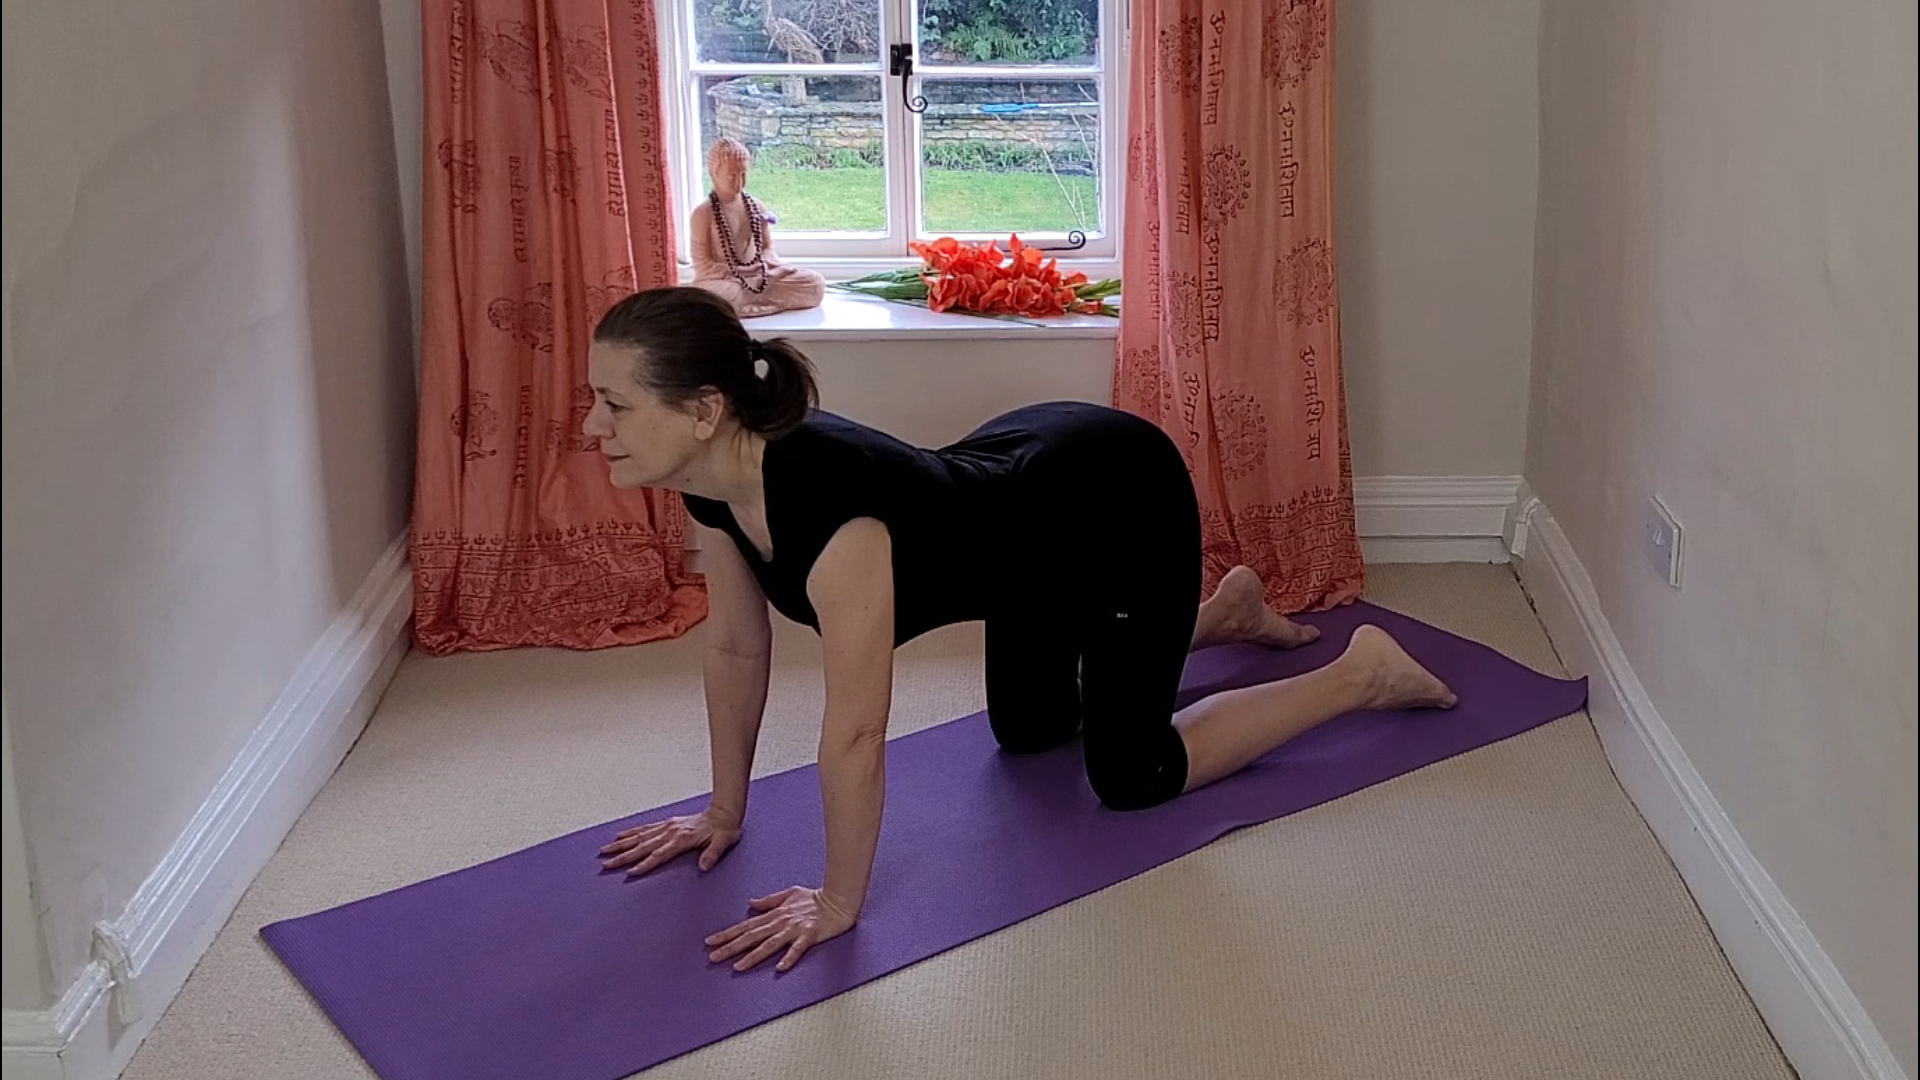 Yoga teacher Deb King demonstrates Marjariasana